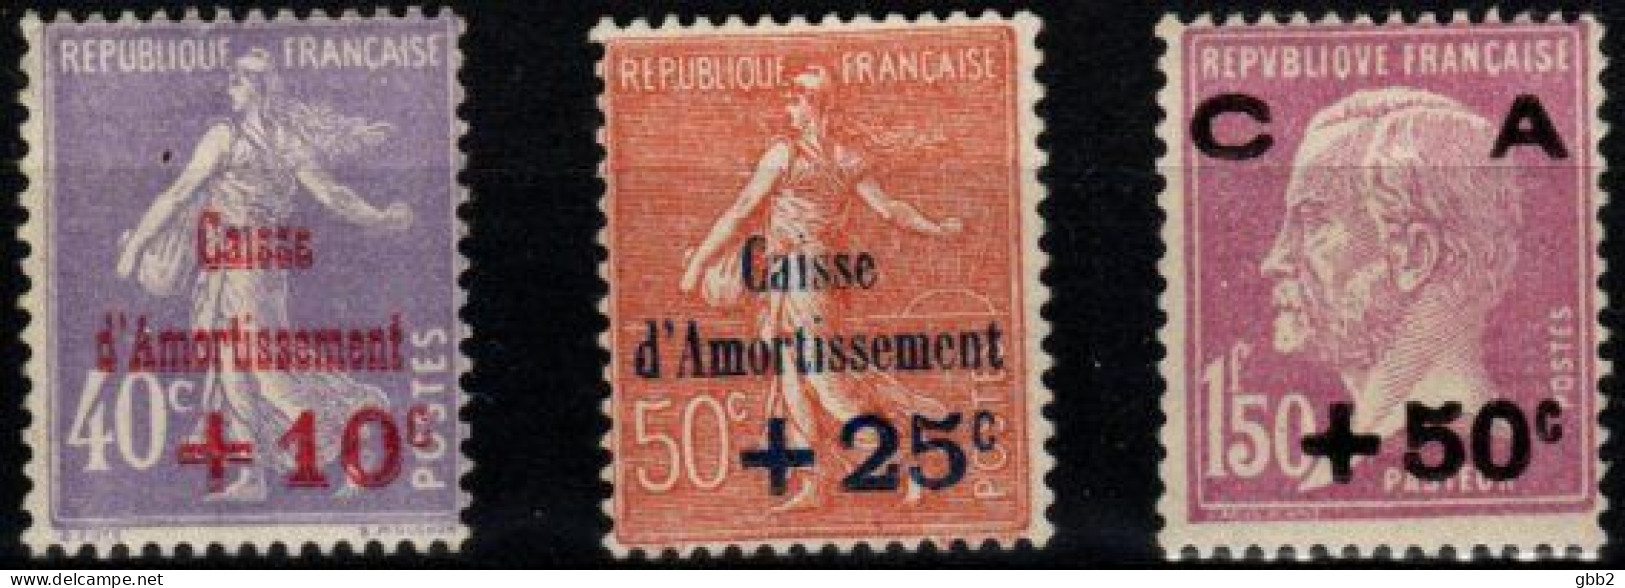 FRANCE - YT N° 249 à 251 "Caisse D'amortissement" 2ème Série. Neuf** LUXE. - 1927-31 Sinking Fund